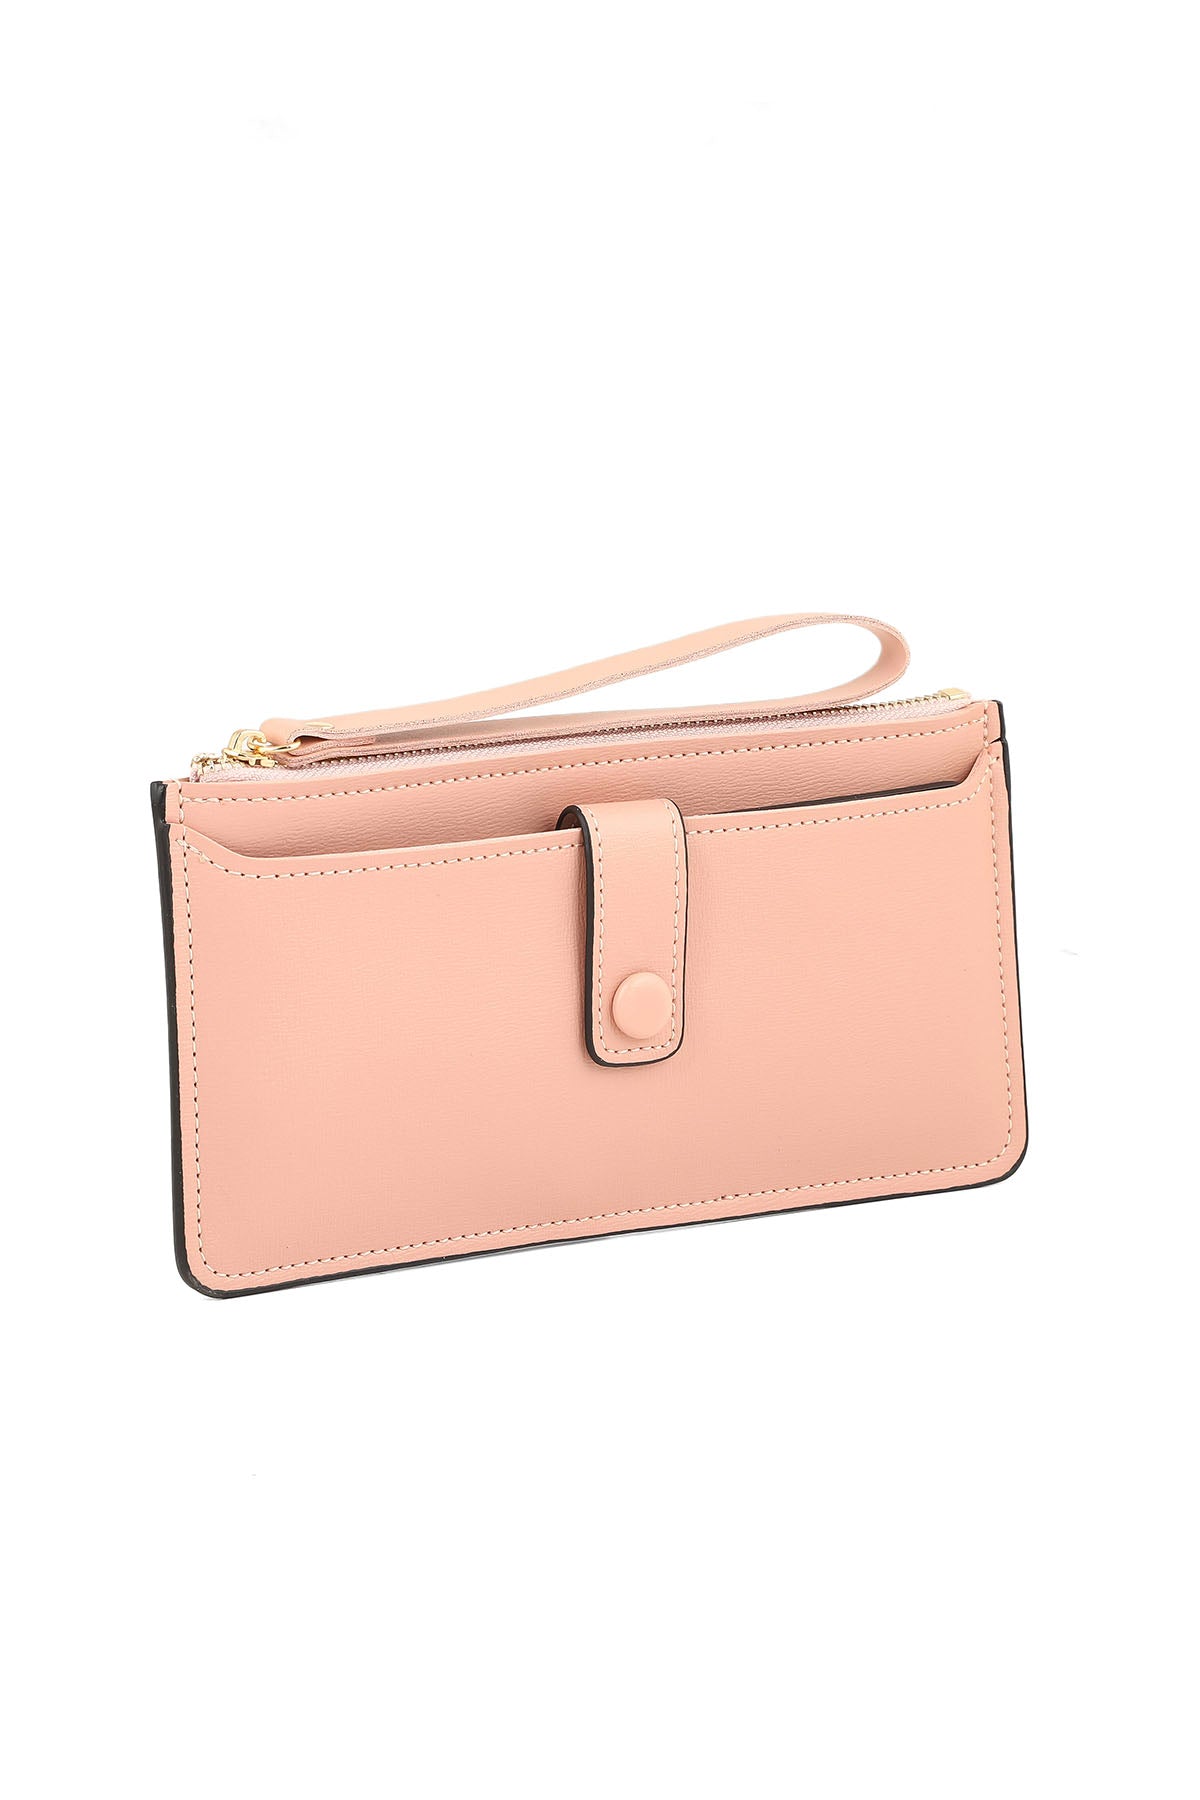 Wristlet Wallet B26049-Pink – Insignia PK